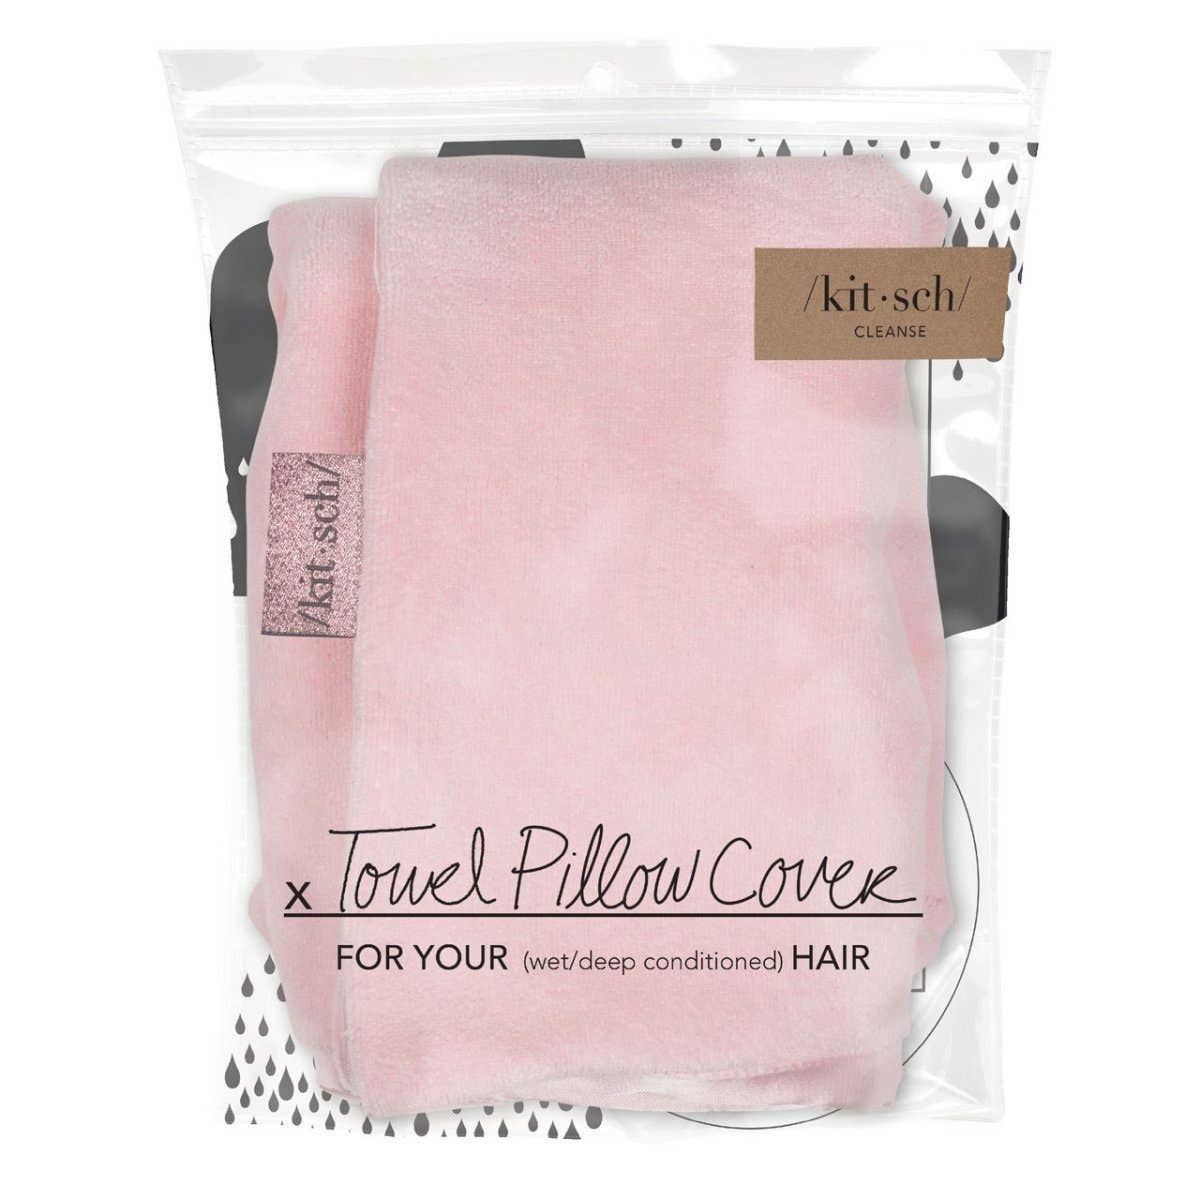 Towel Pillow Cover - Blush